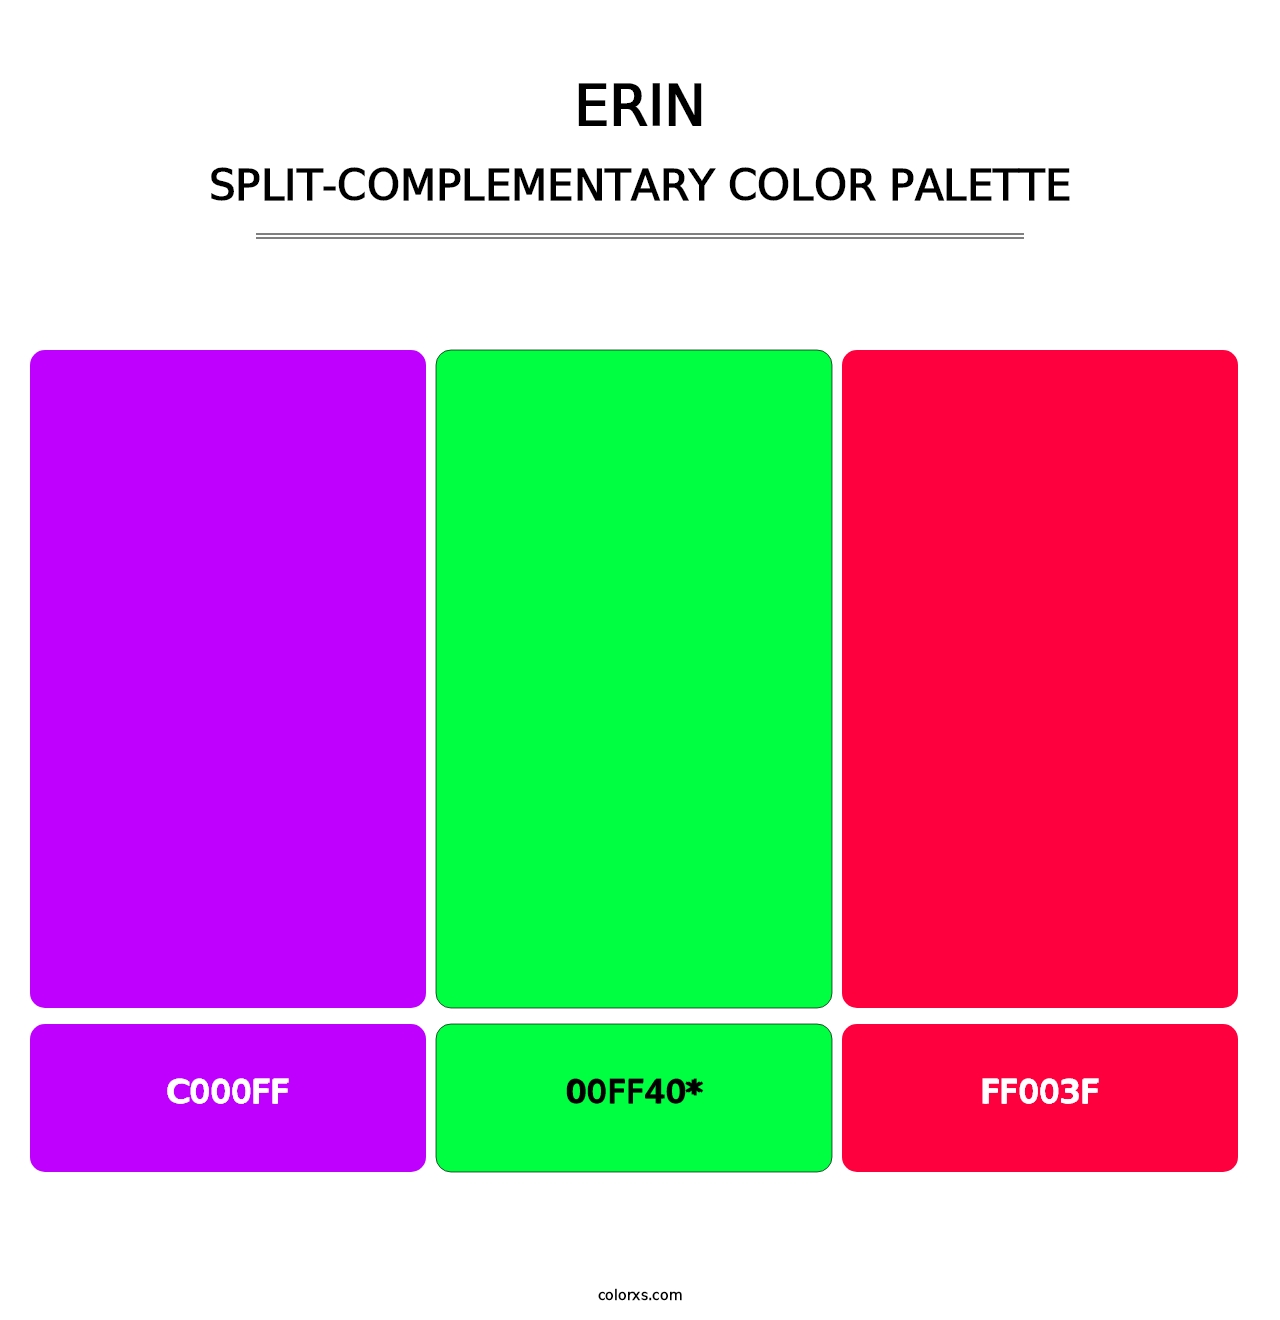 Erin - Split-Complementary Color Palette